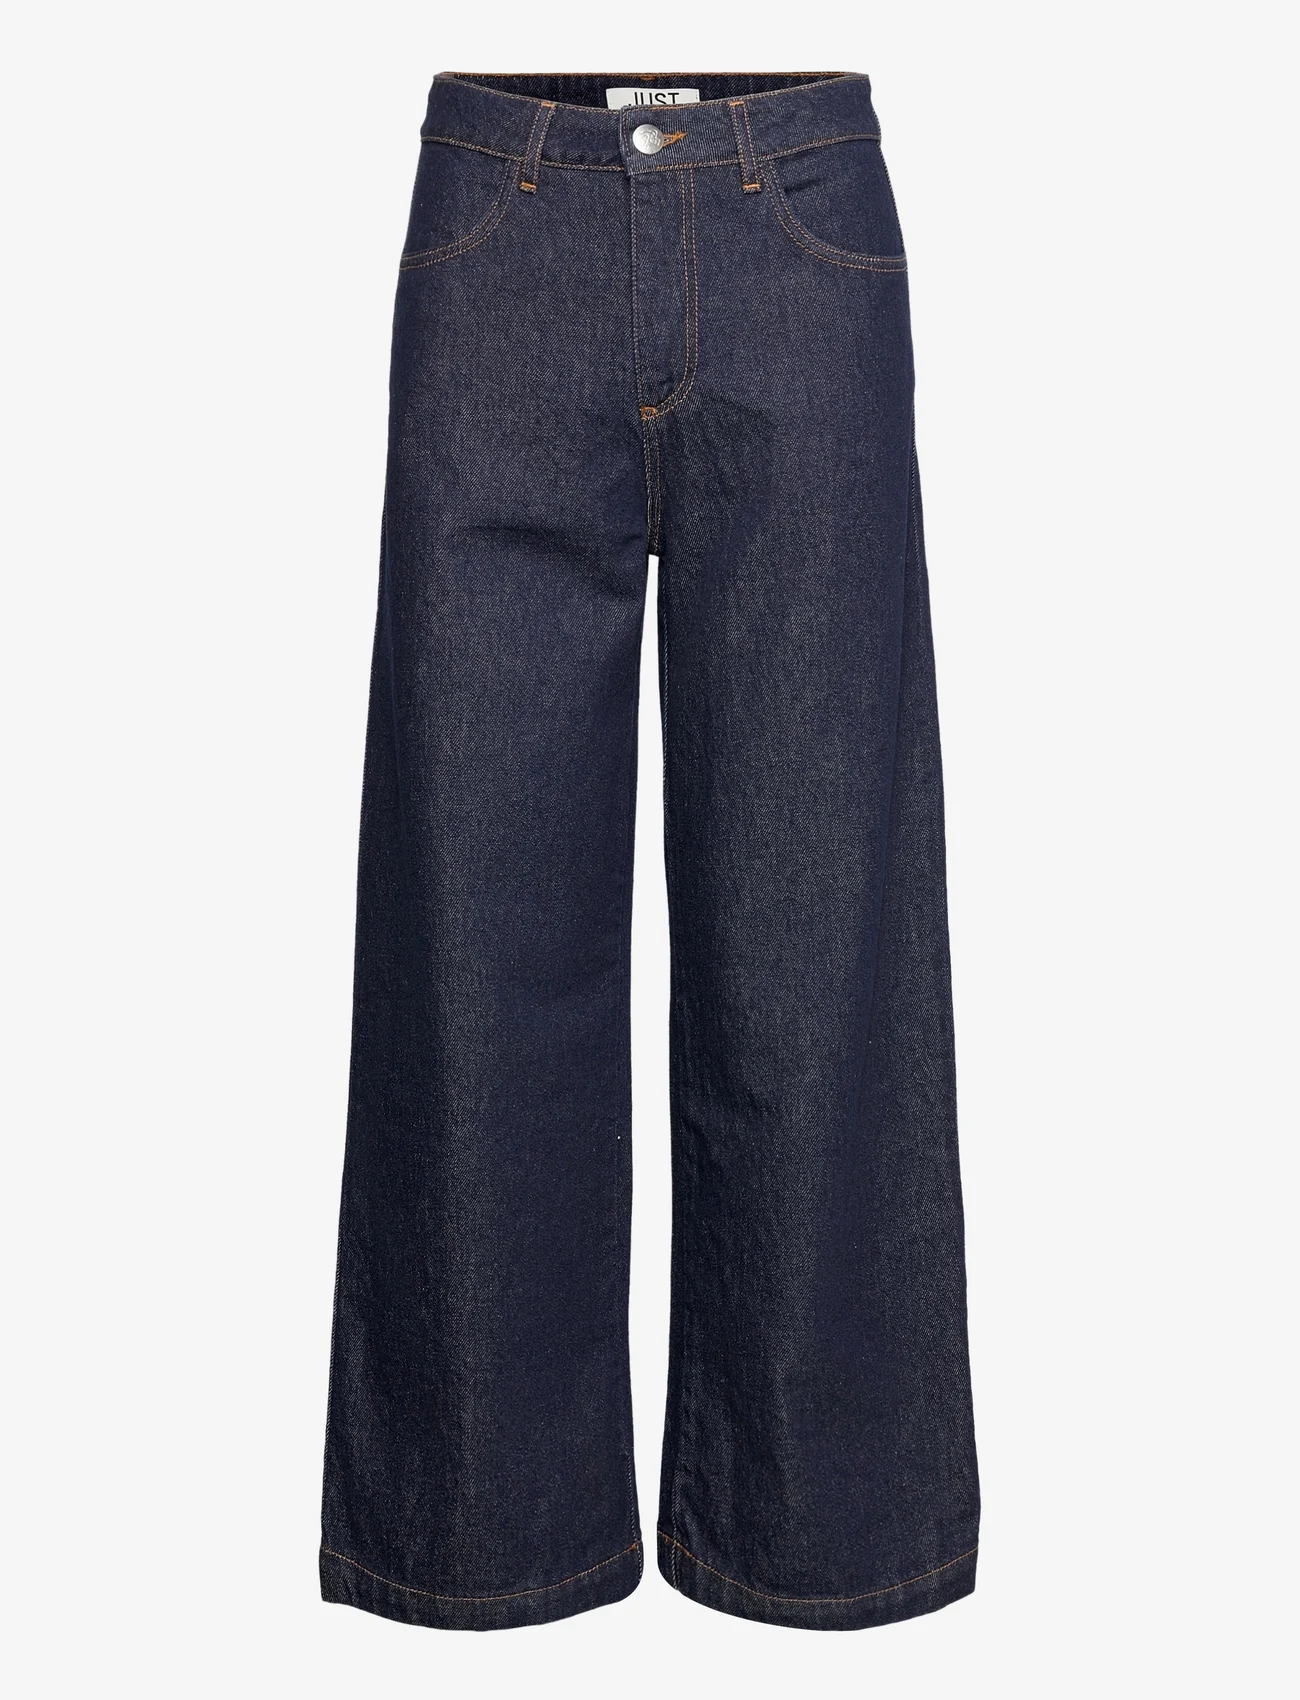 Just Female - Calm jeans 0103 - vida jeans - blue rinse - 0